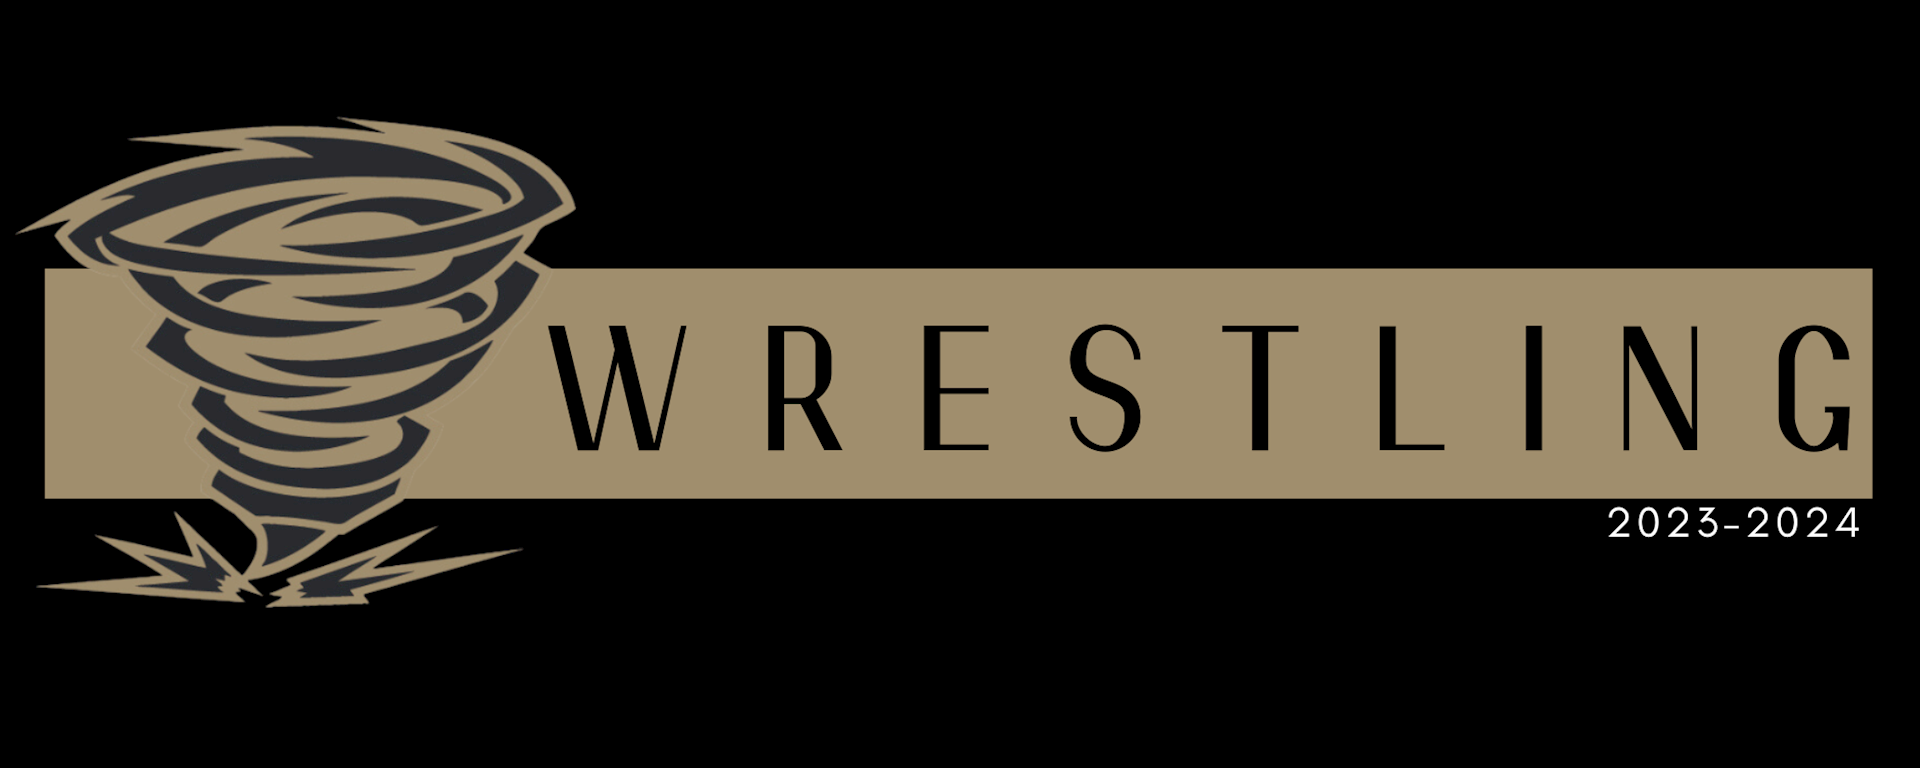 Wrestling Homepage.png